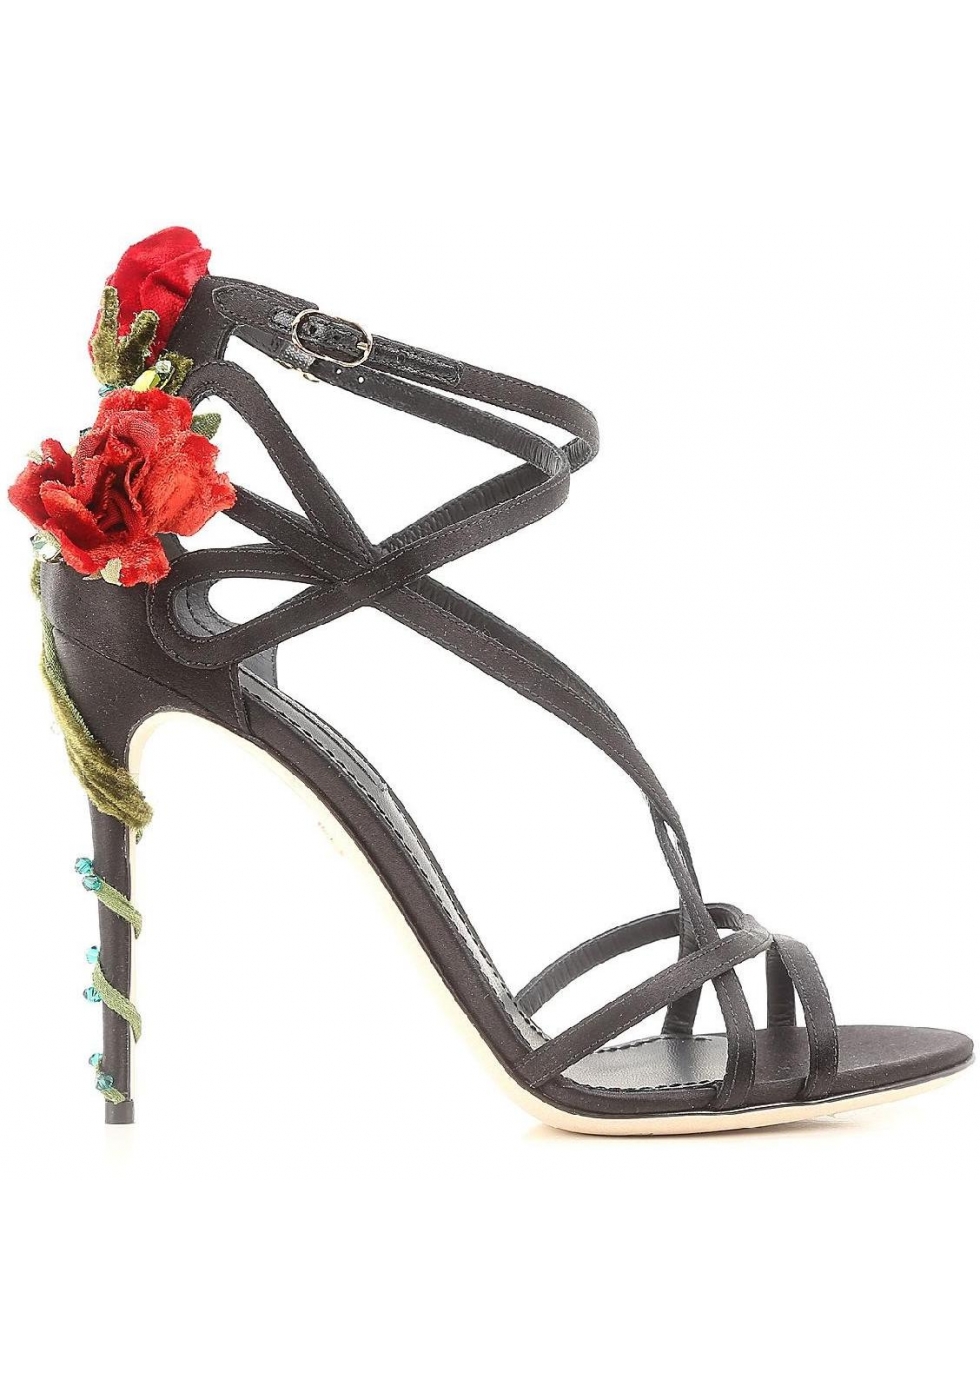 Dolce&Gabbana high heel sandals in black satin - Italian Boutique